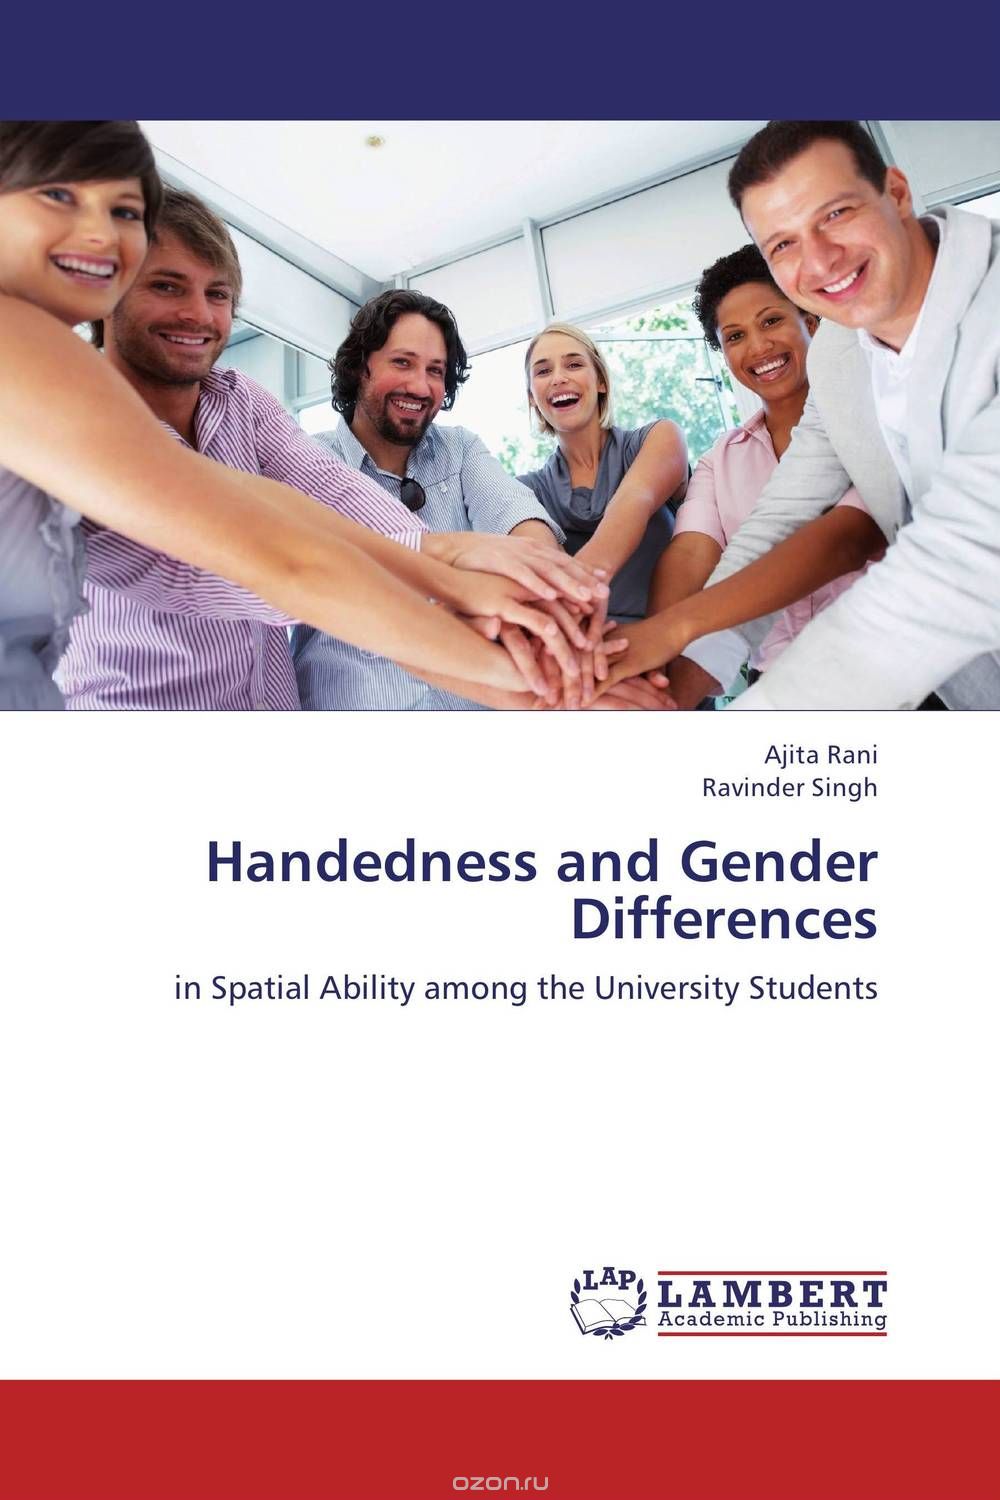 Скачать книгу "Handedness and Gender Differences"